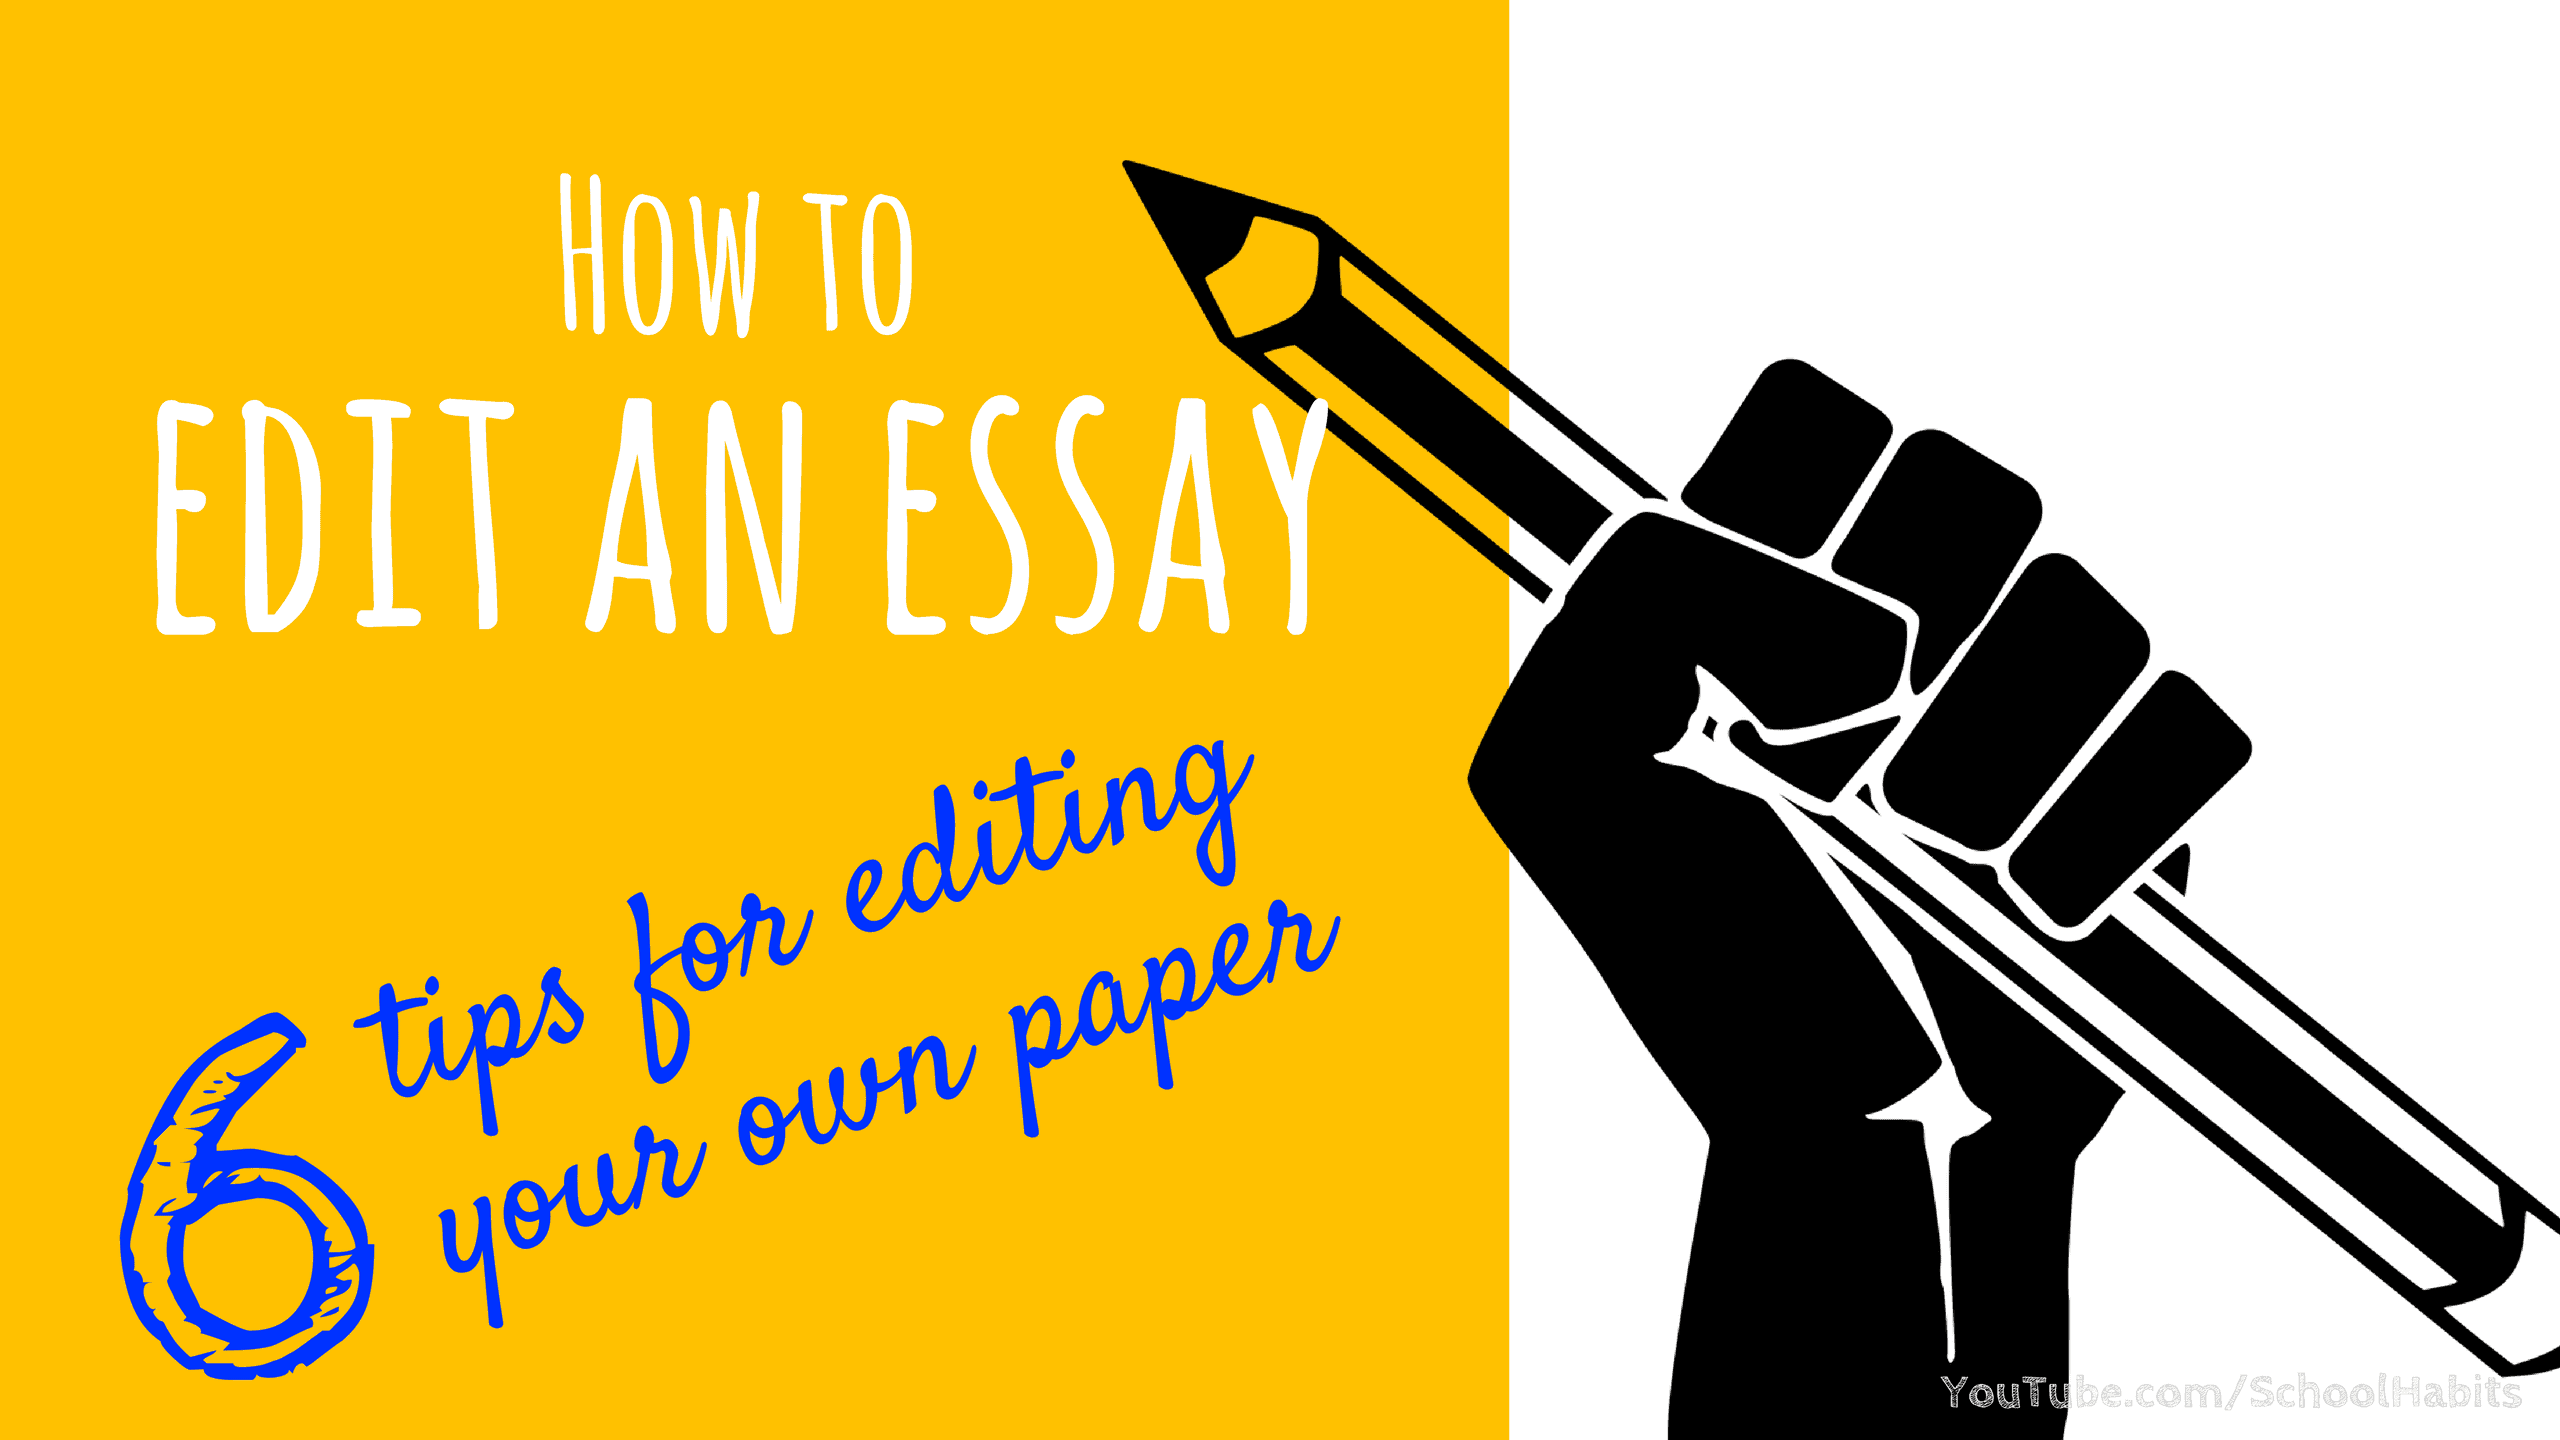 Editing essays